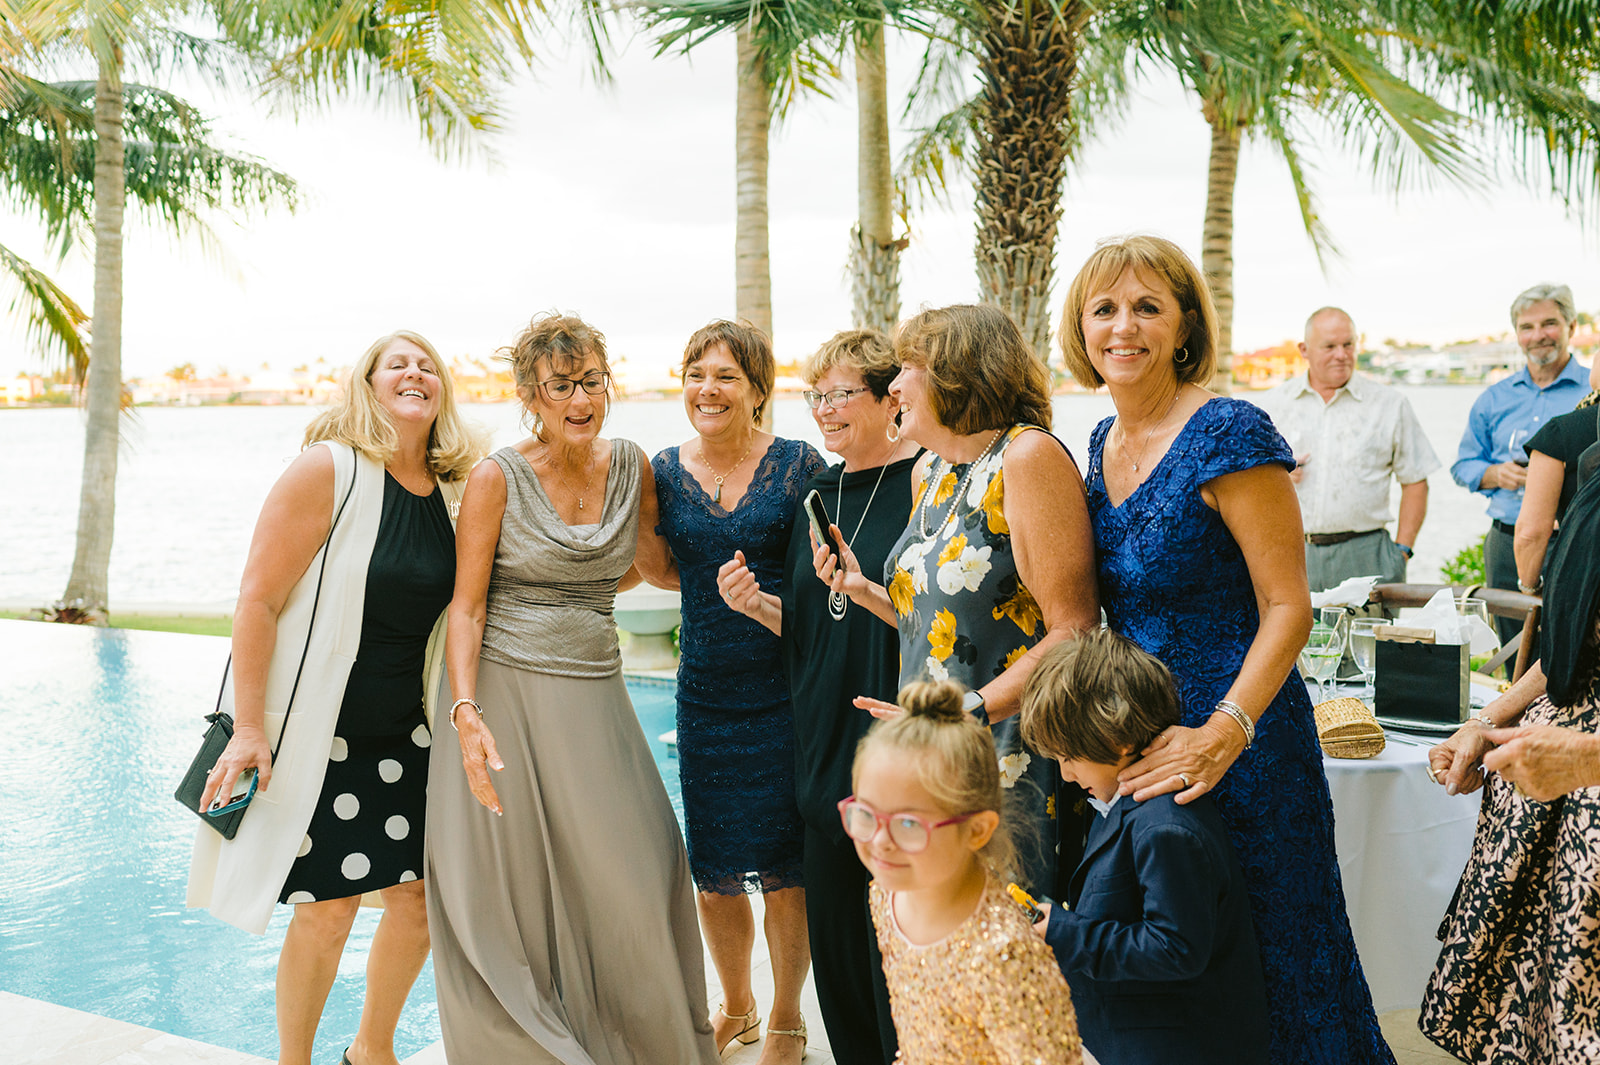 Naples Florida wedding photographer captures the bride's beautiful veil
